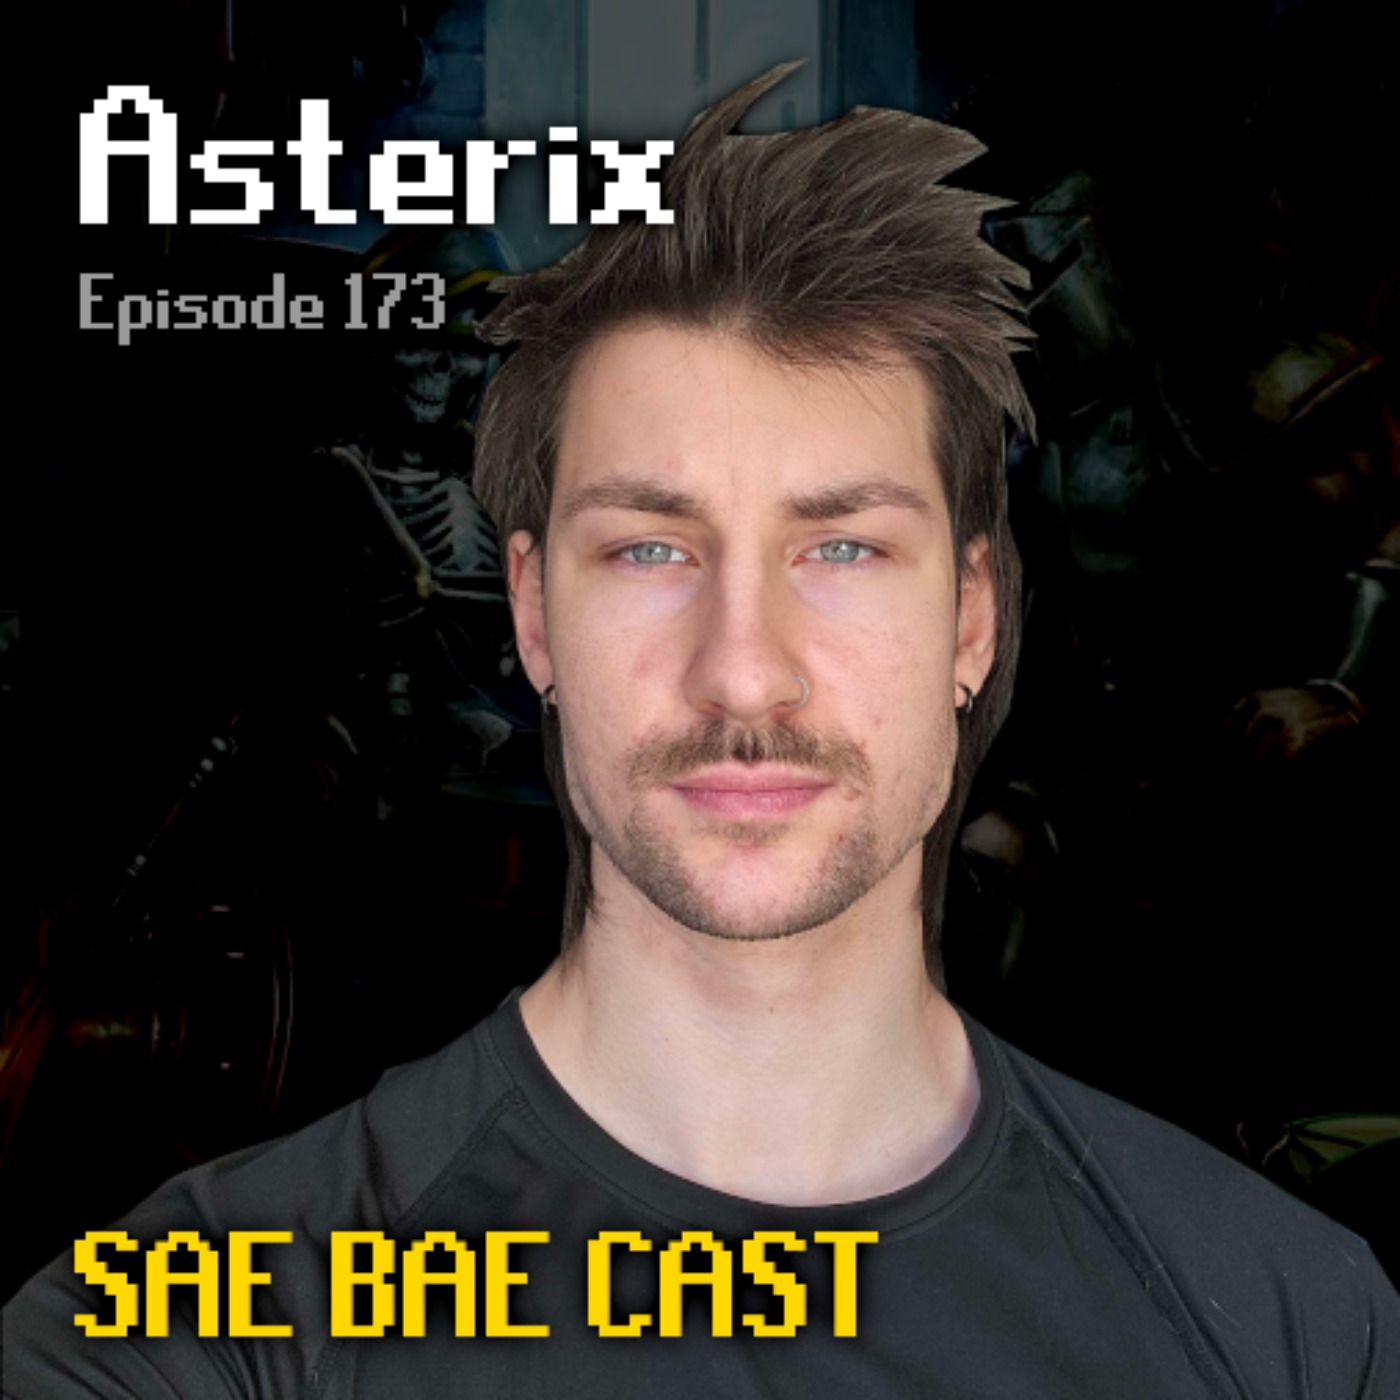 Asterix - Behemeth Highlights, Based Takeover, Video Editing, Fitness | Sae Bae Cast 173